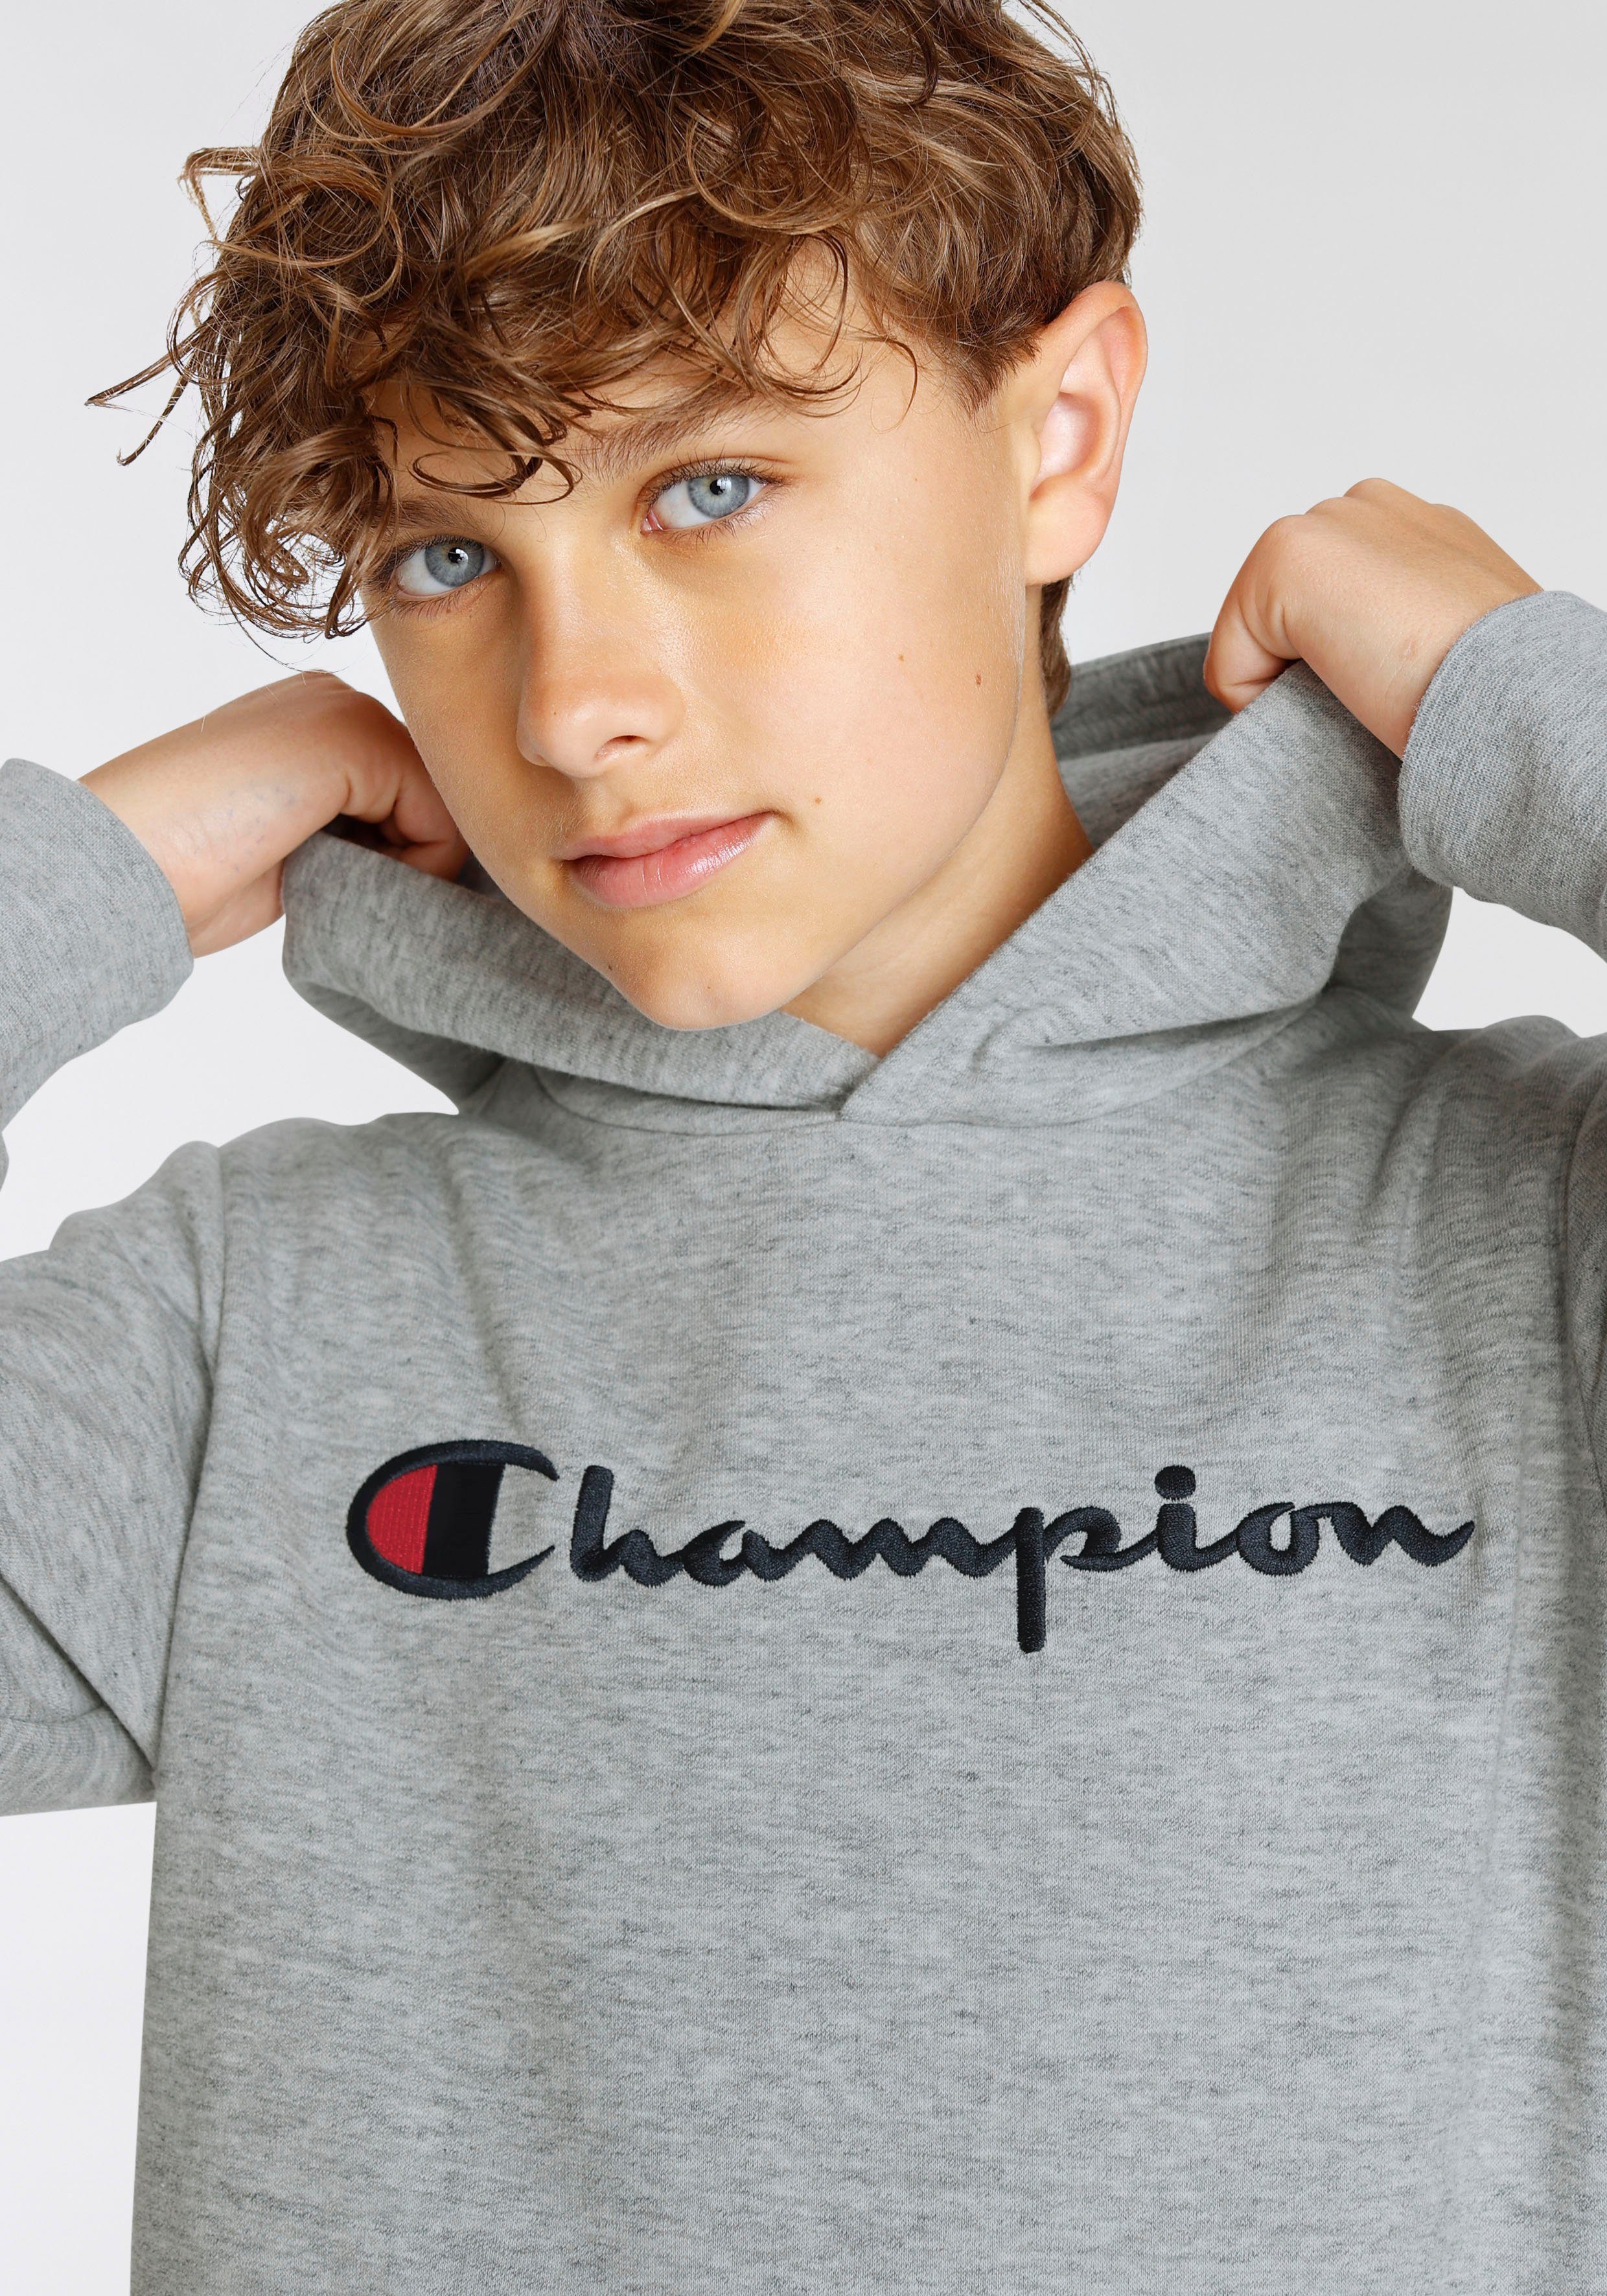 grau Sweatshirt - Logo large Champion Classic Hooded Kinder Sweatshirt für 2